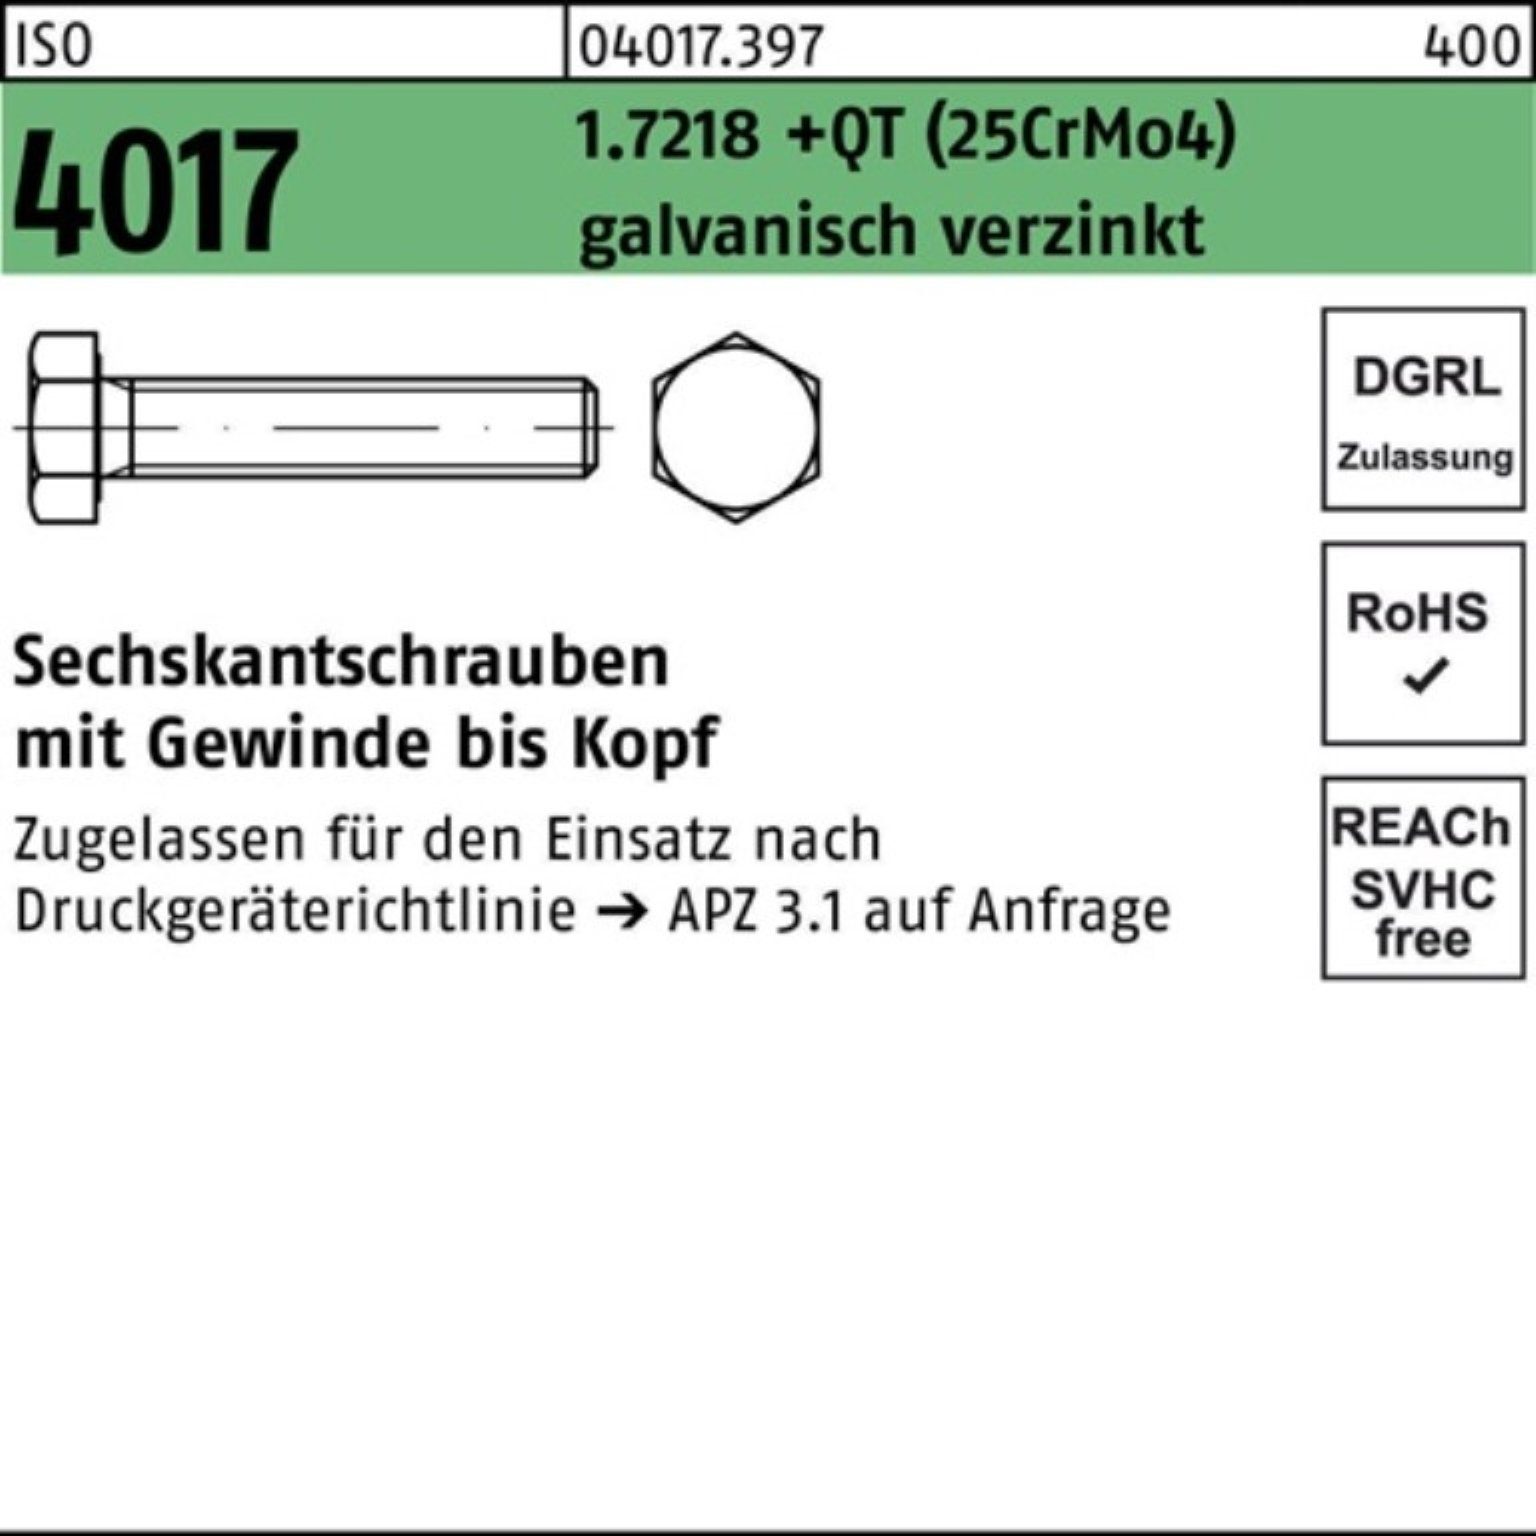 Bufab Sechskantschraube g +QT (25CrMo4) VG 4017 1.7218 Pack M30x75 100er Sechskantschraube ISO